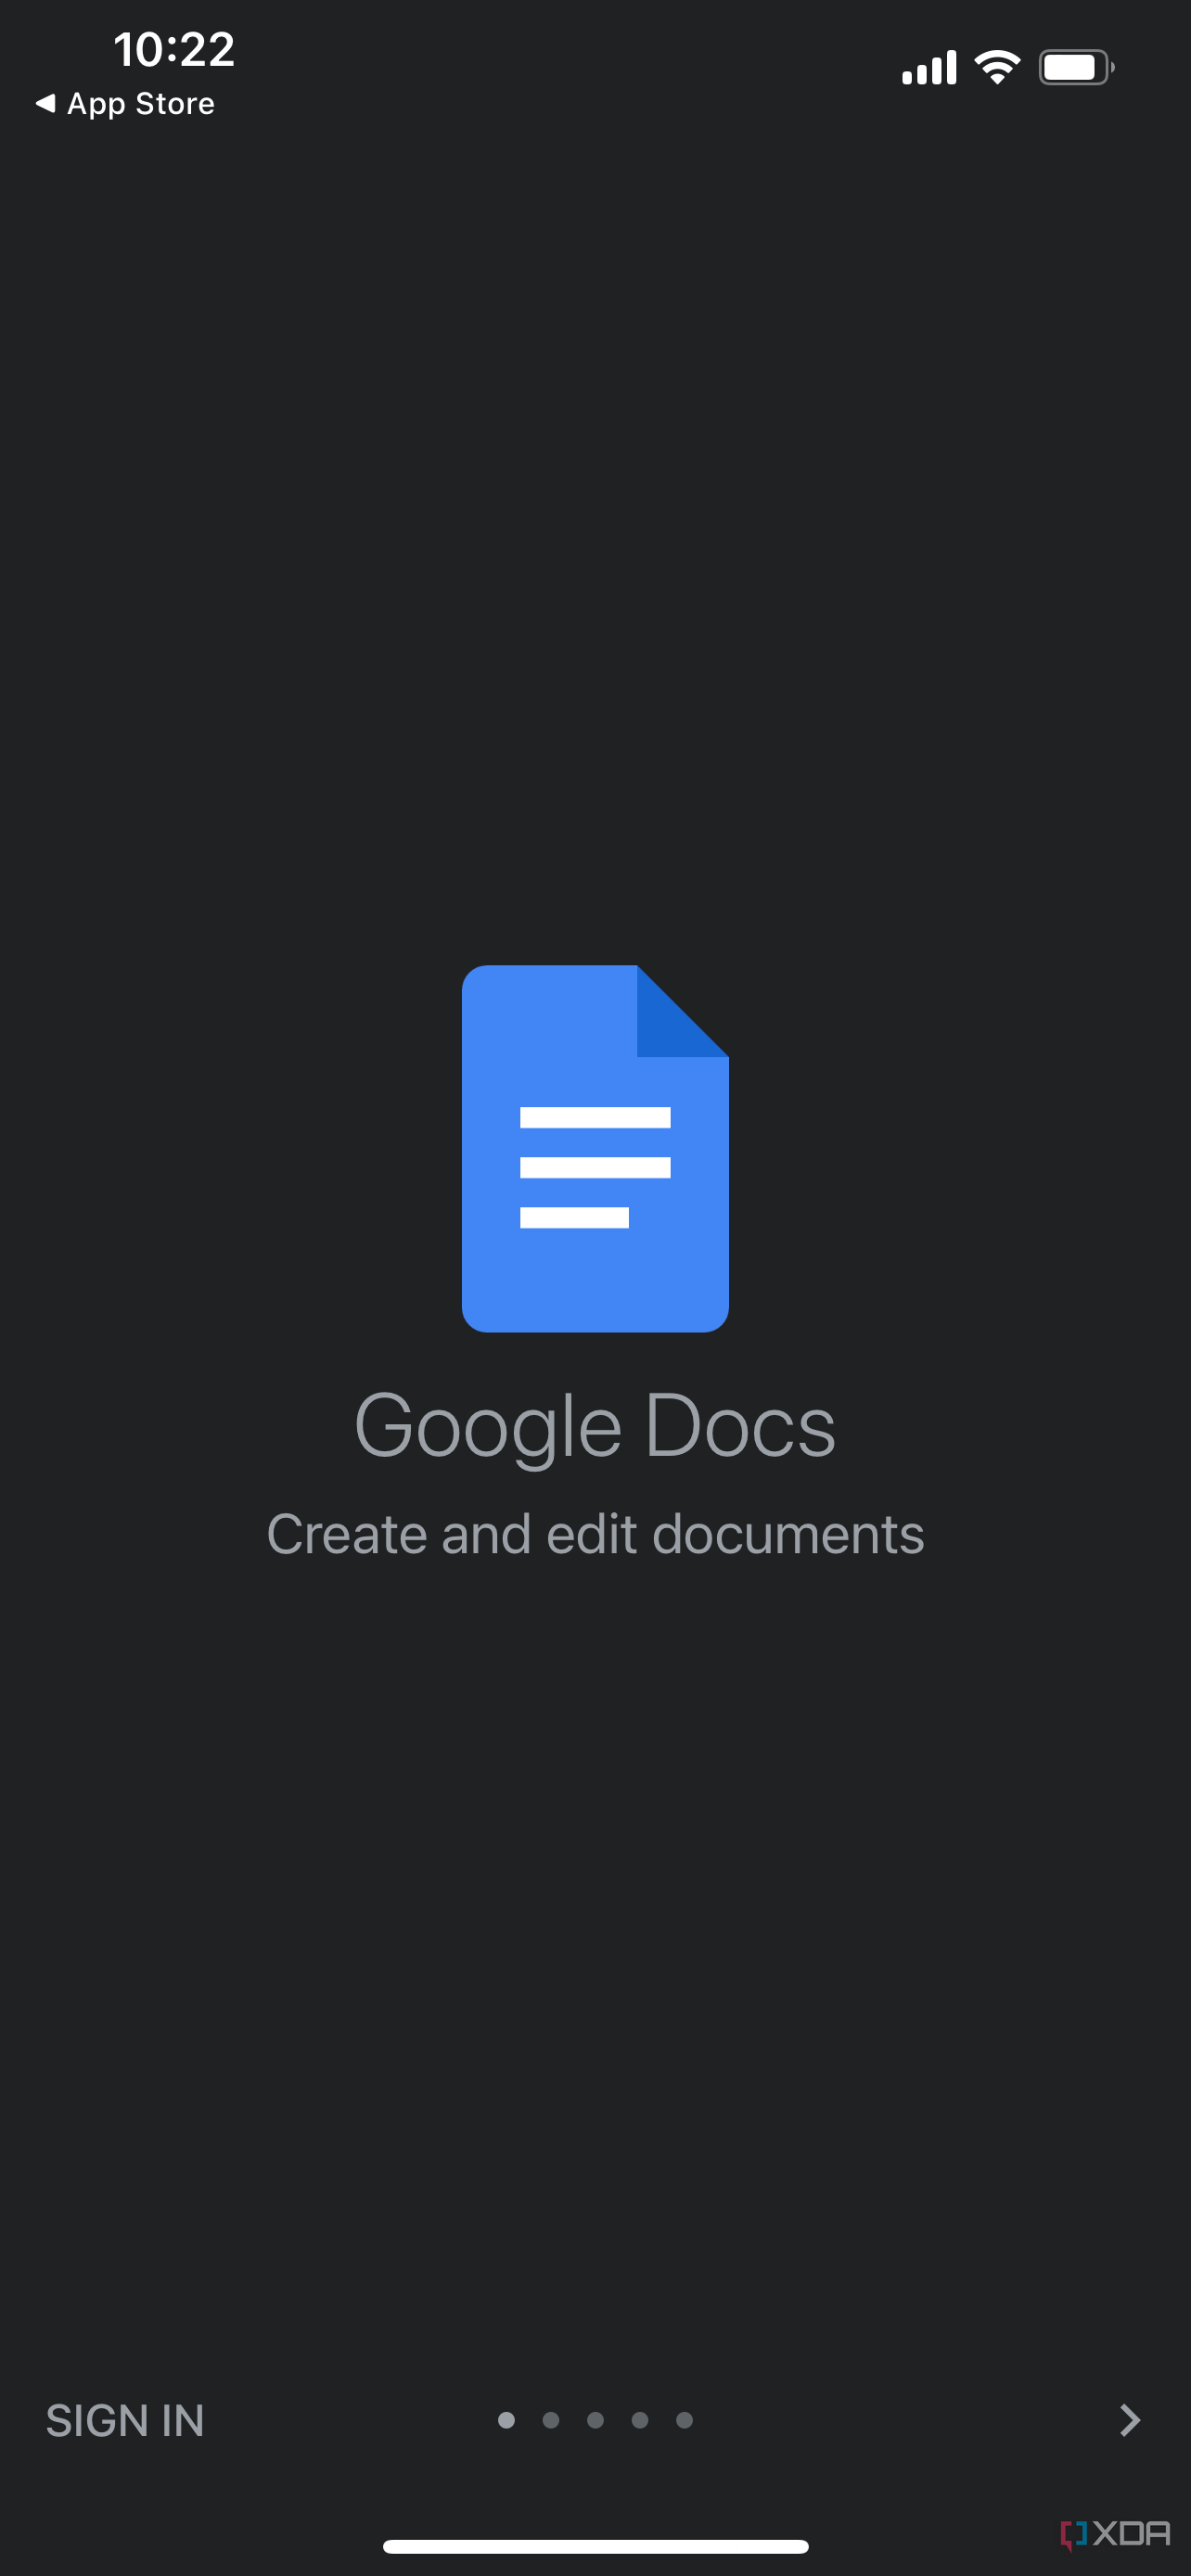 Google Docs launch screen on iOS